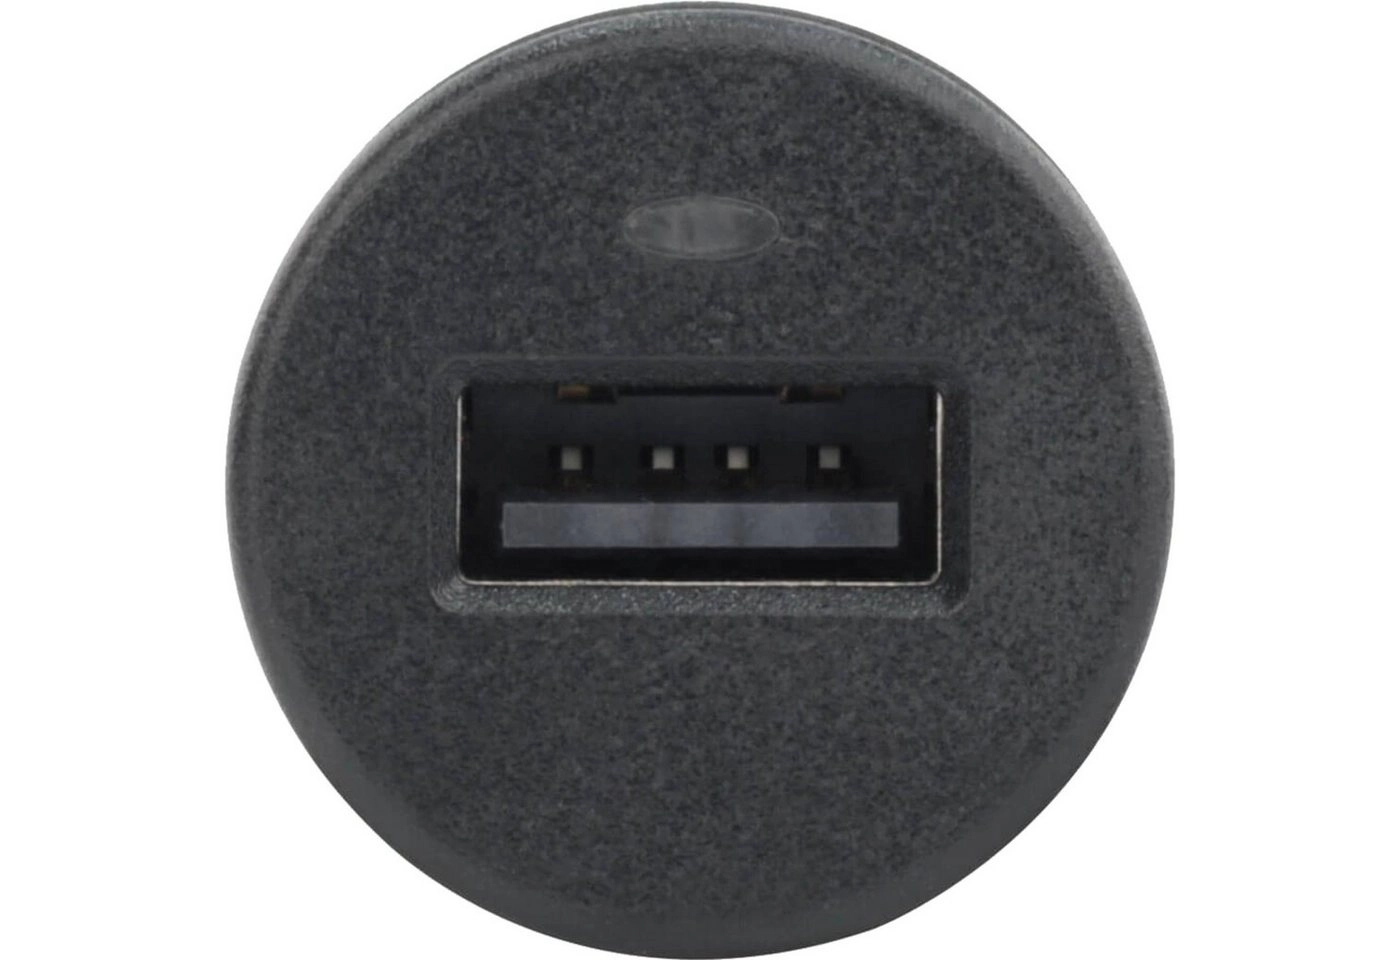 Carcharger USB 1A 1Port, Ladegerät